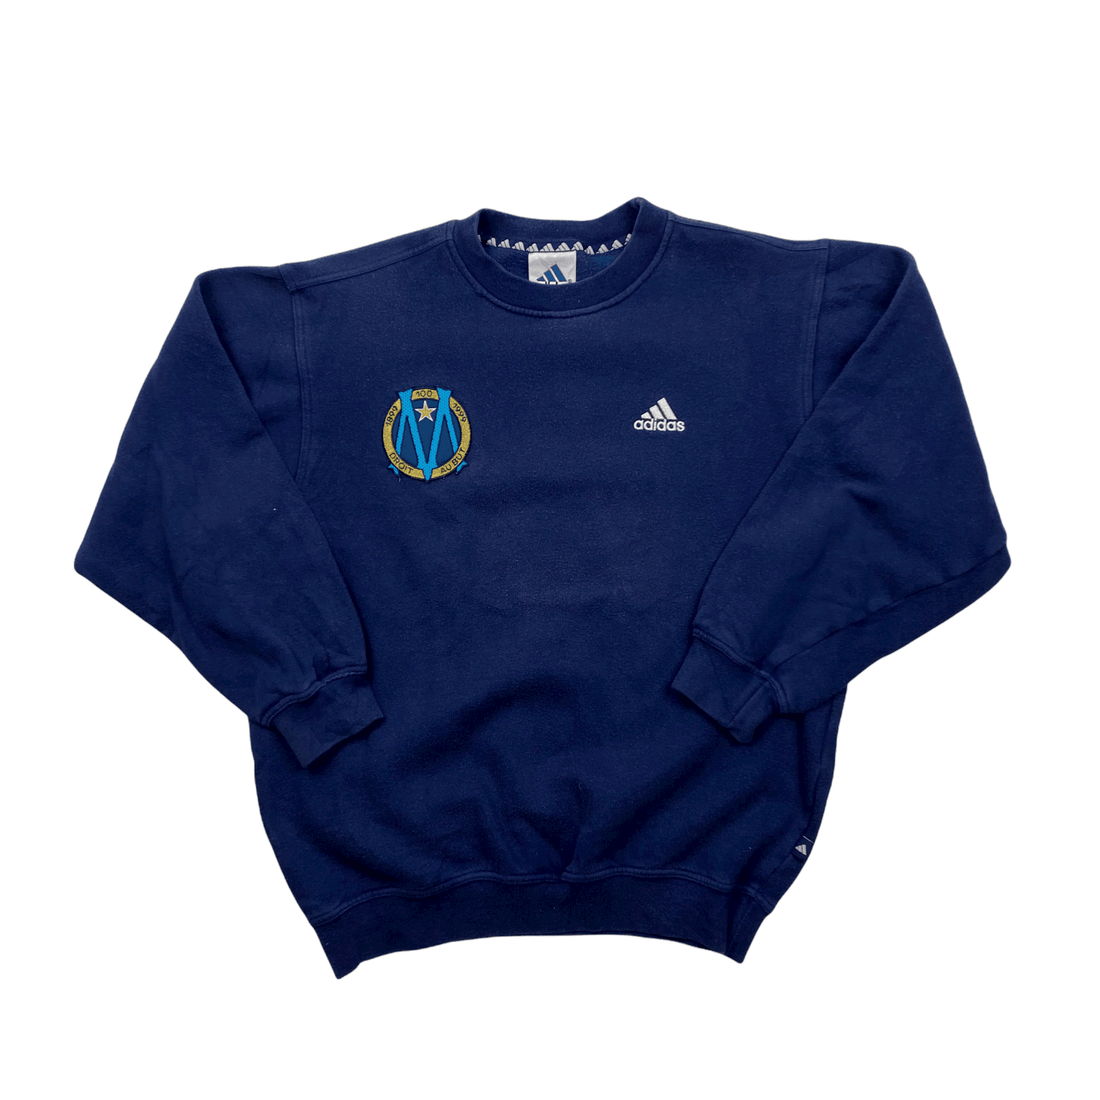 Vintage 90s Navy Blue Adidas Marseille Football Sweatshirt - Small - The Streetwear Studio